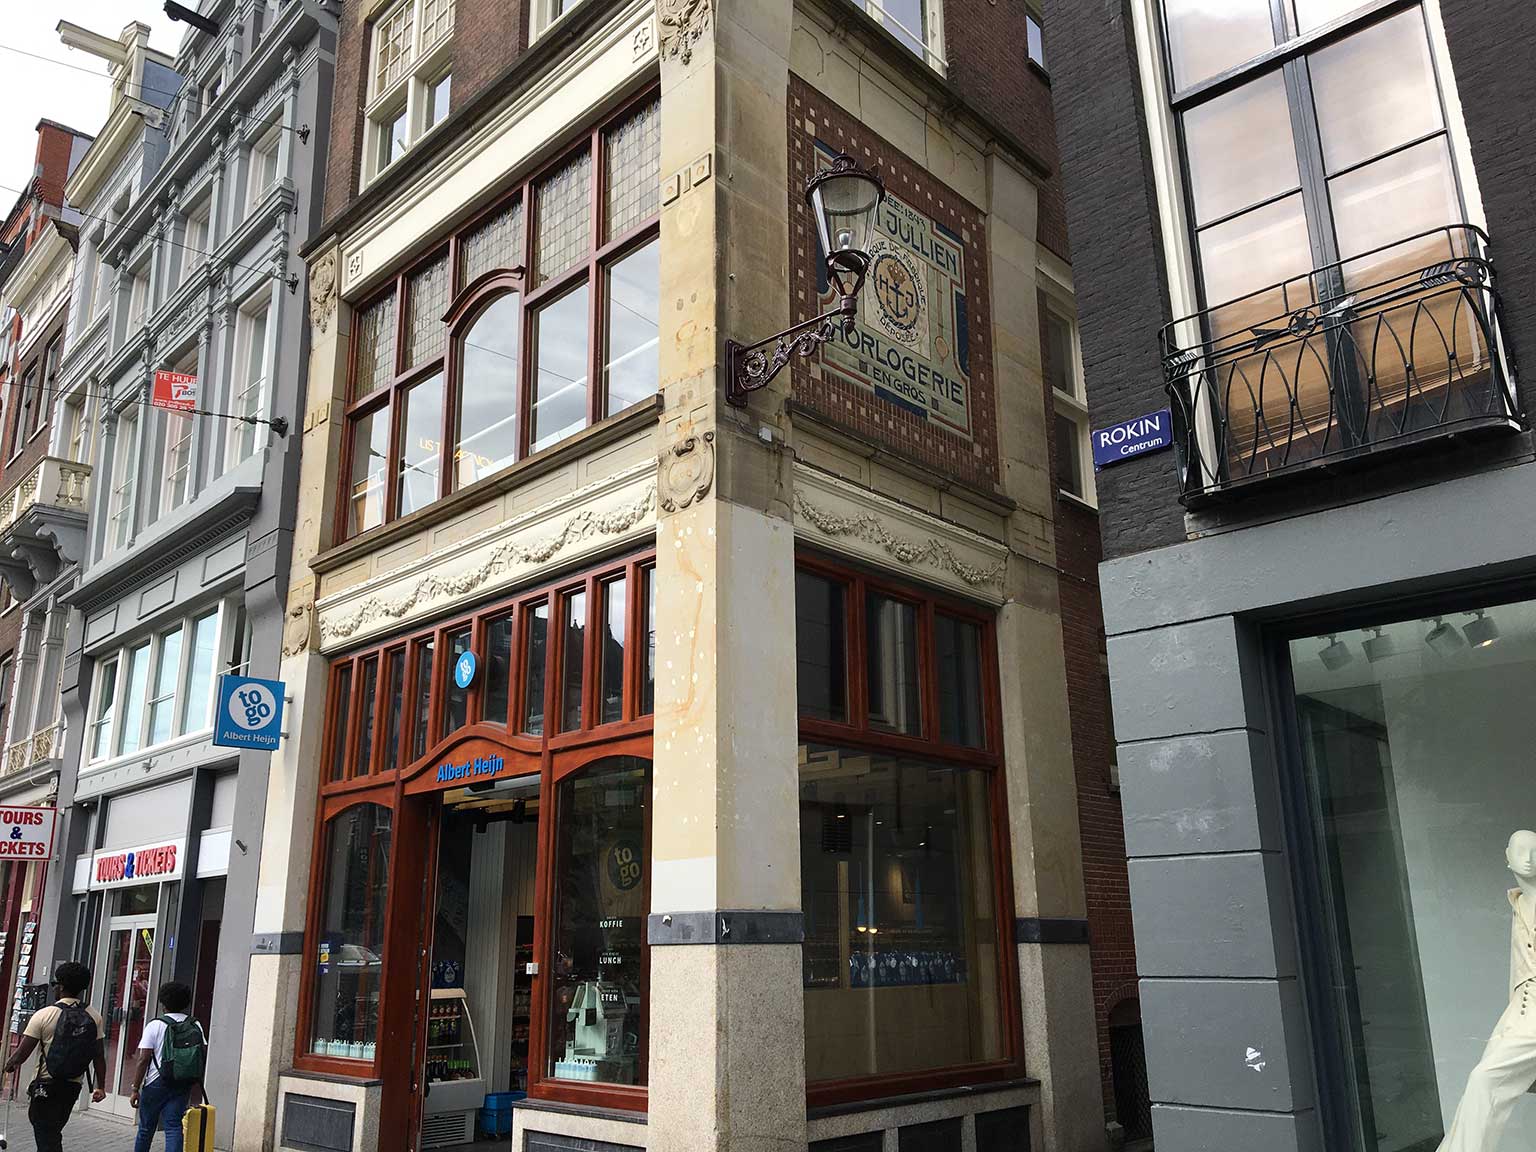 Gapersteeg, Amsterdam, between Rokin 34 and 36 with mural advert for watch seller Henri Jullien